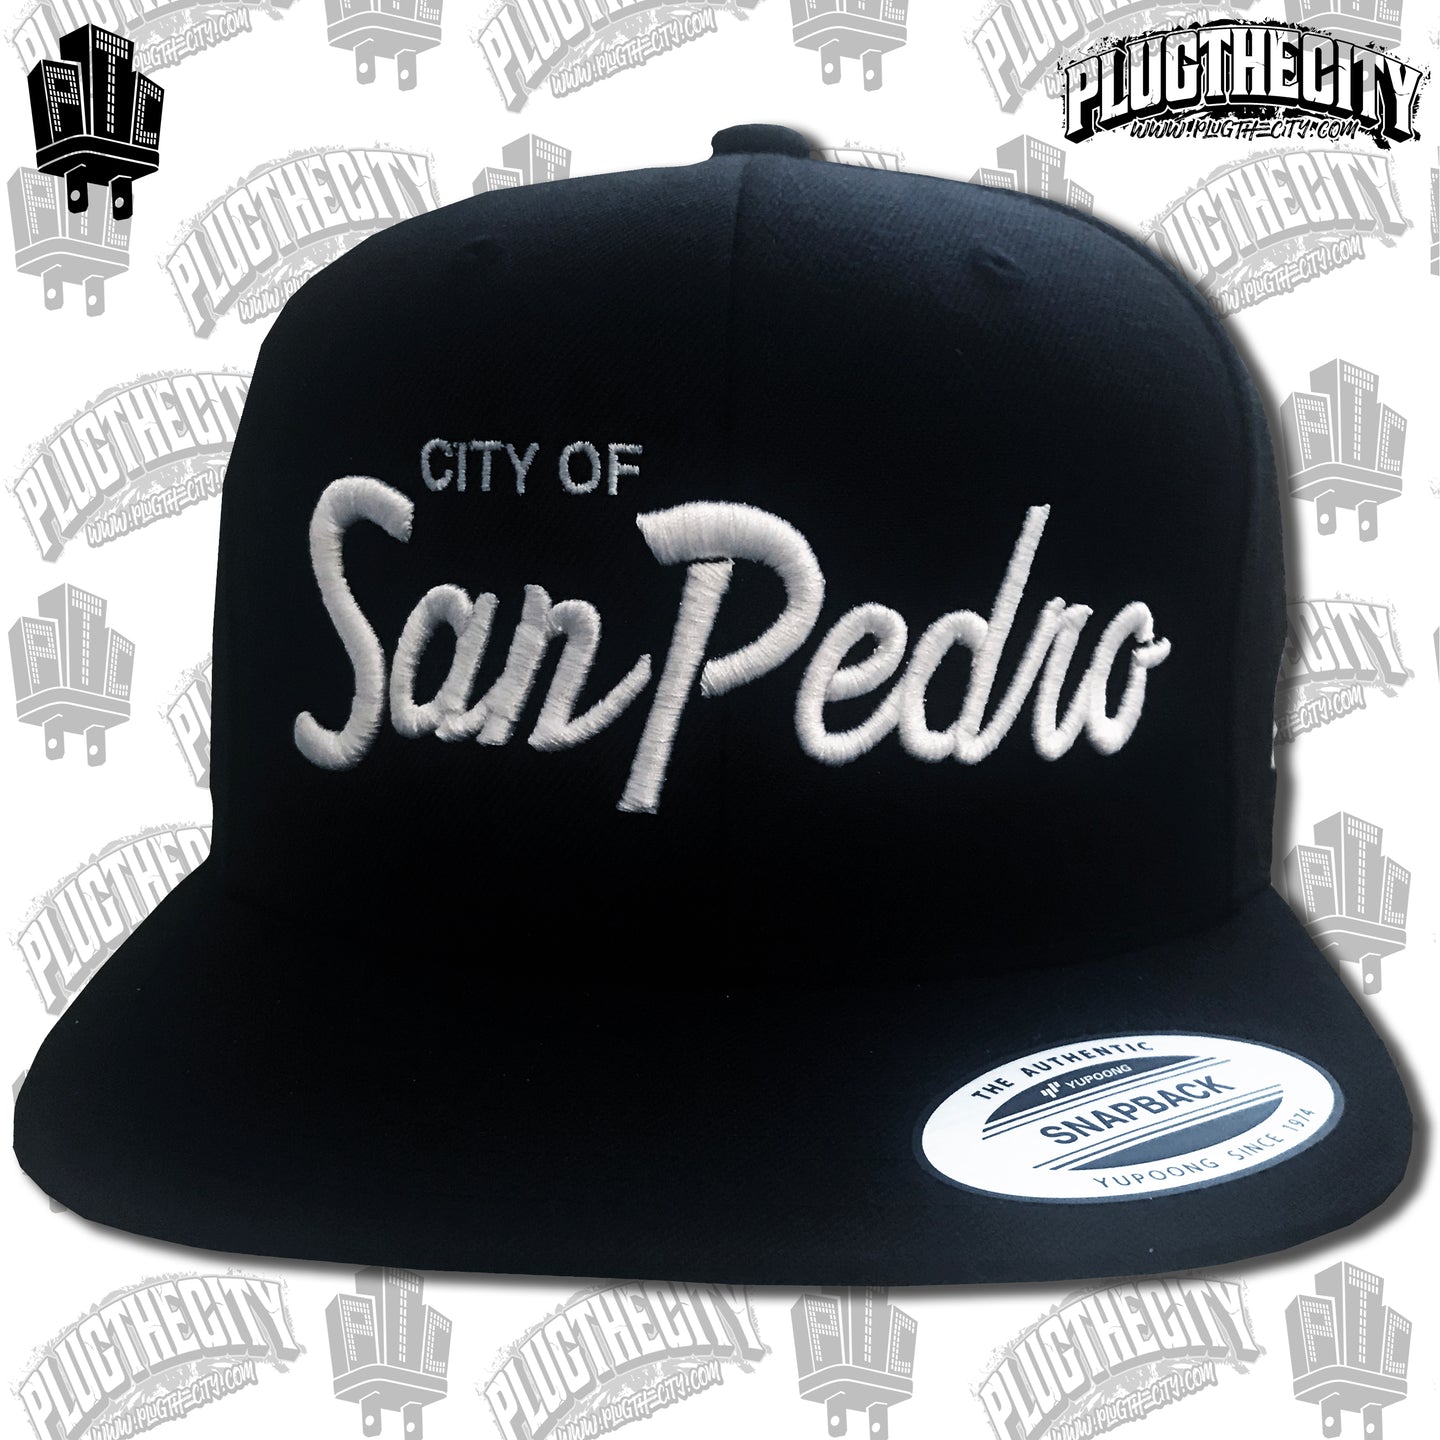 City of San Pedro-110 & PTC on the side of snapback baseball hat-Color:Black